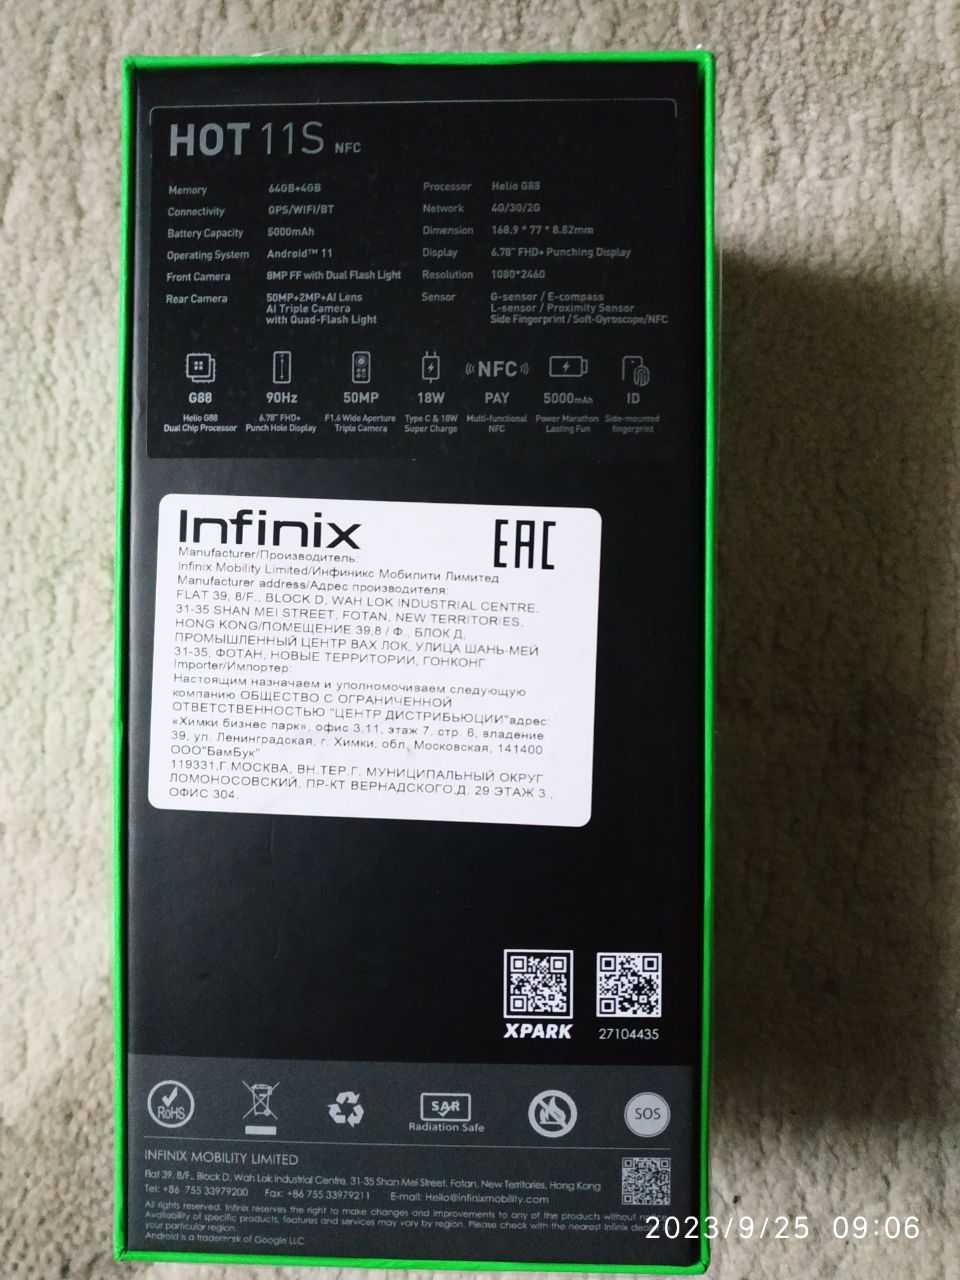 продам Infinix Hot 11S 4/64, Black, NFC в новому стані